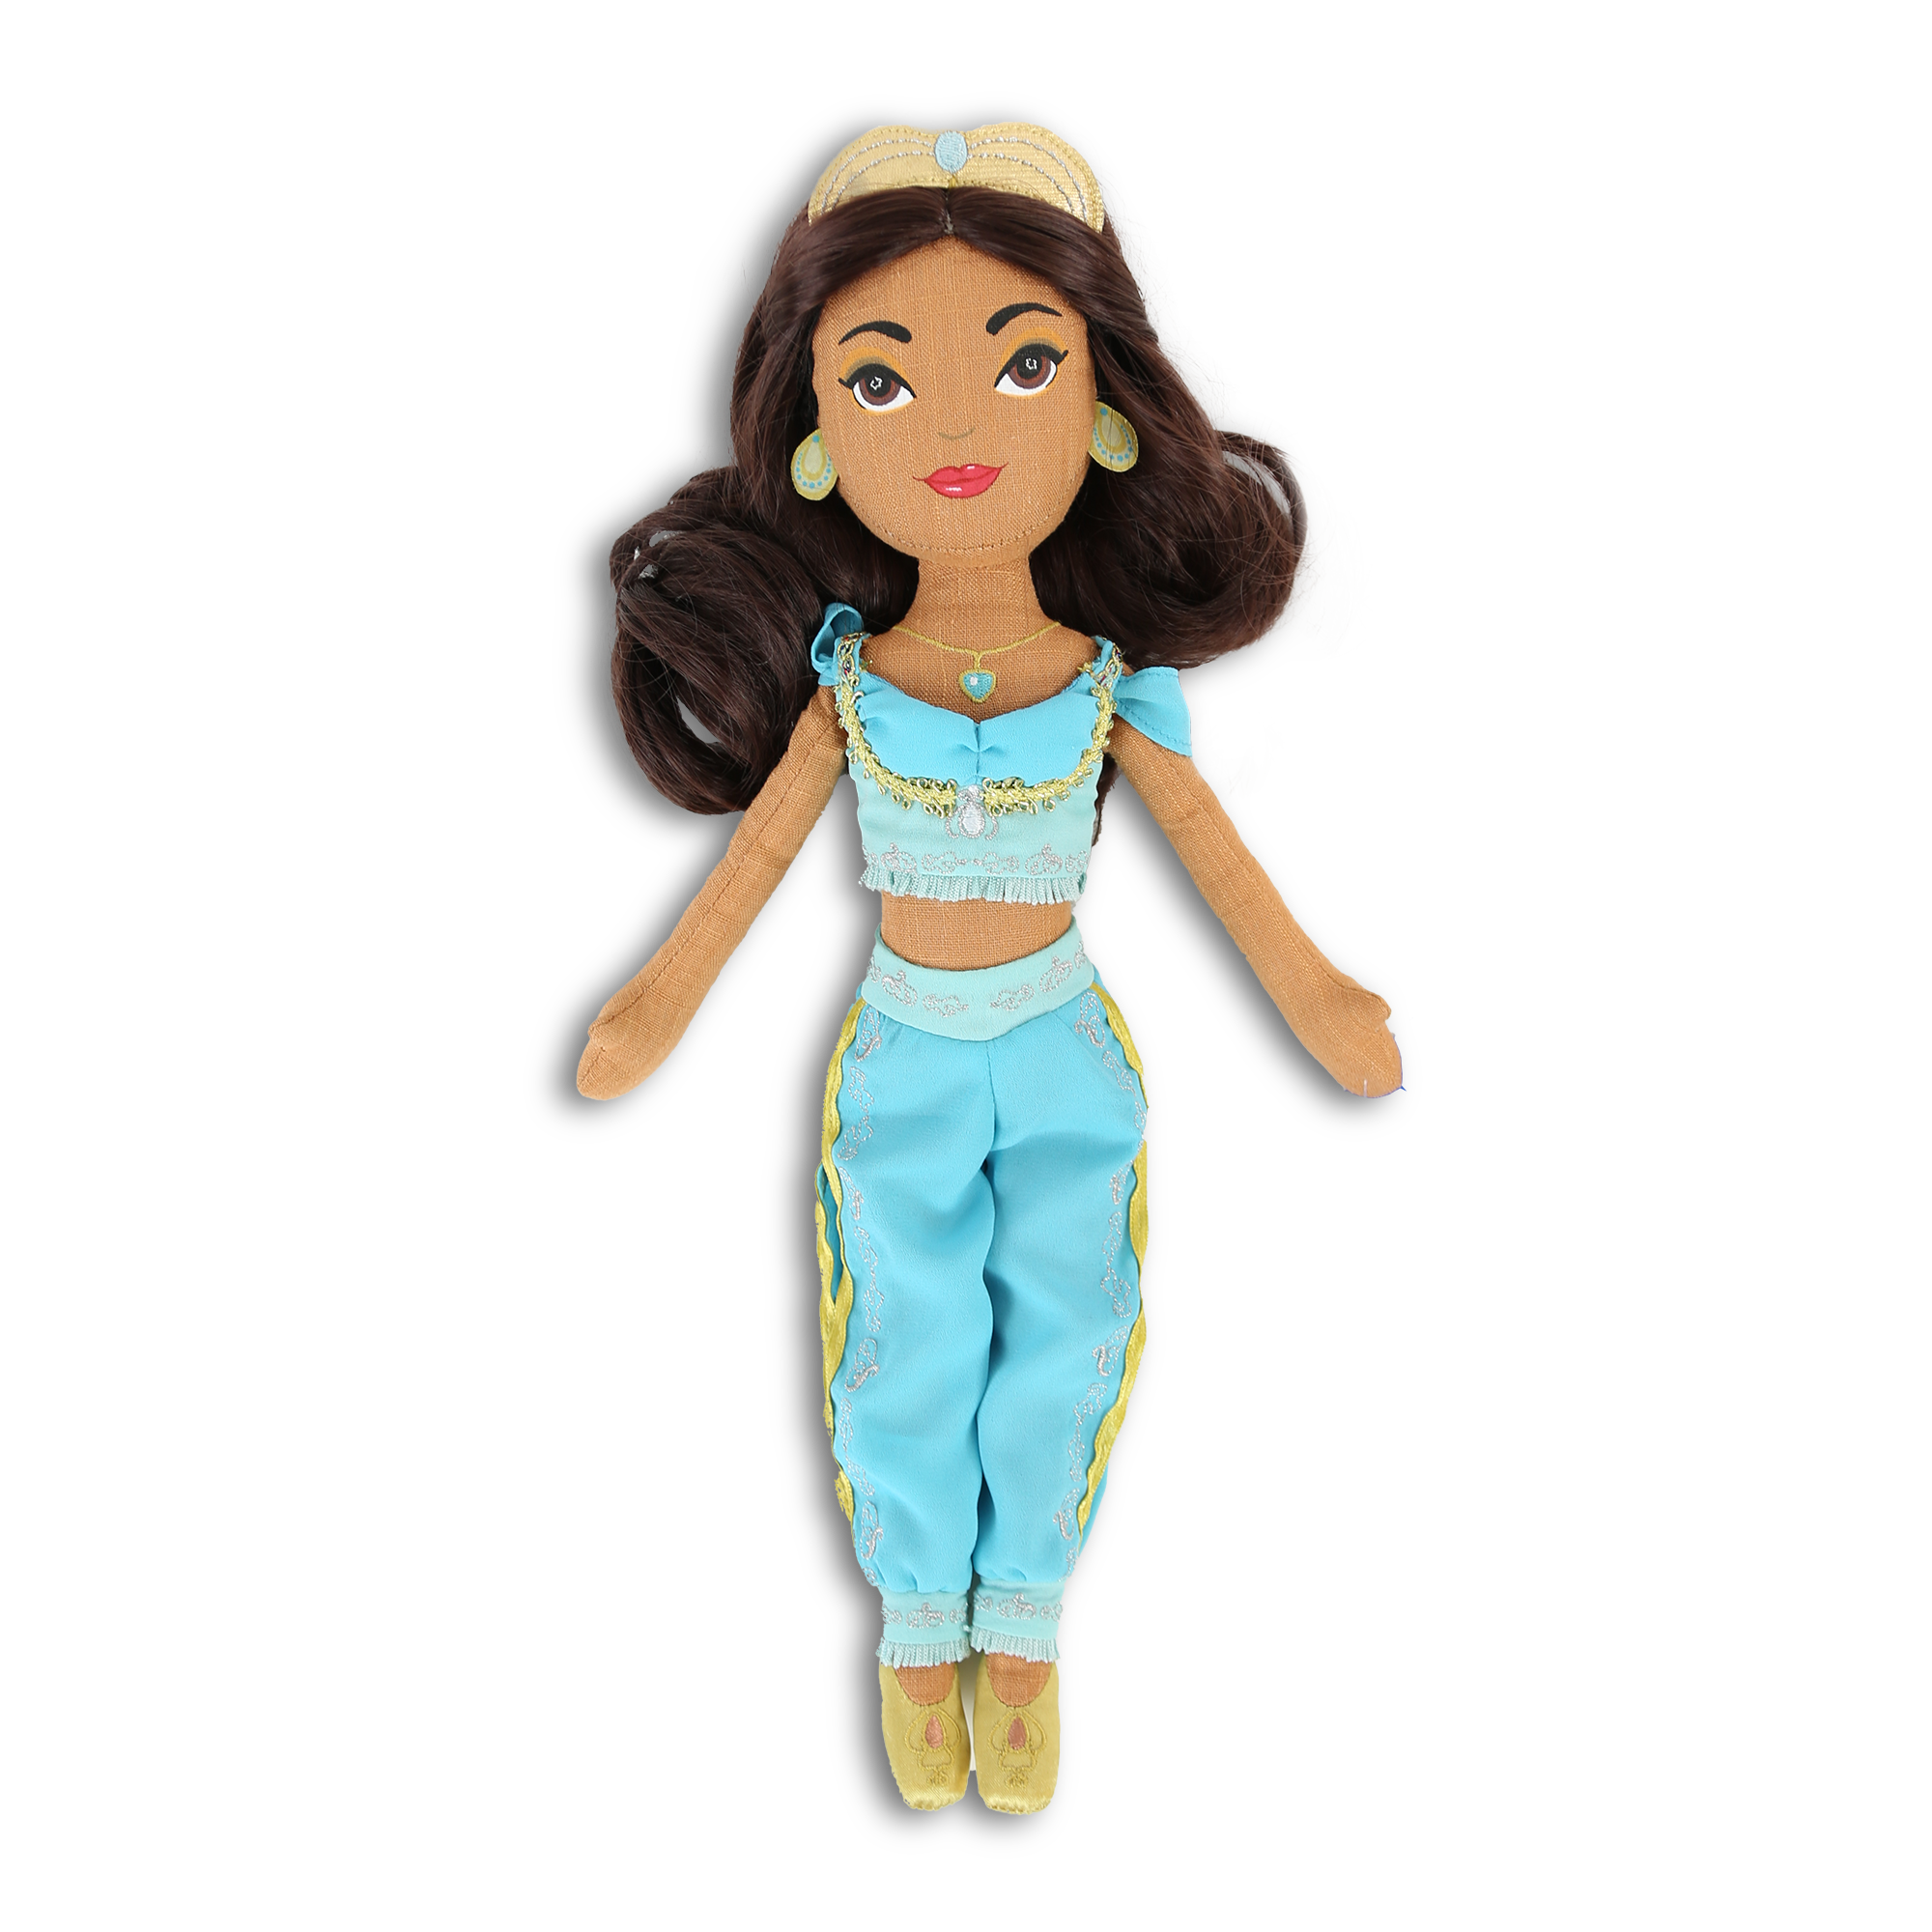 Aladdin the Broadway Musical - Deluxe Princess Jasmine Plush